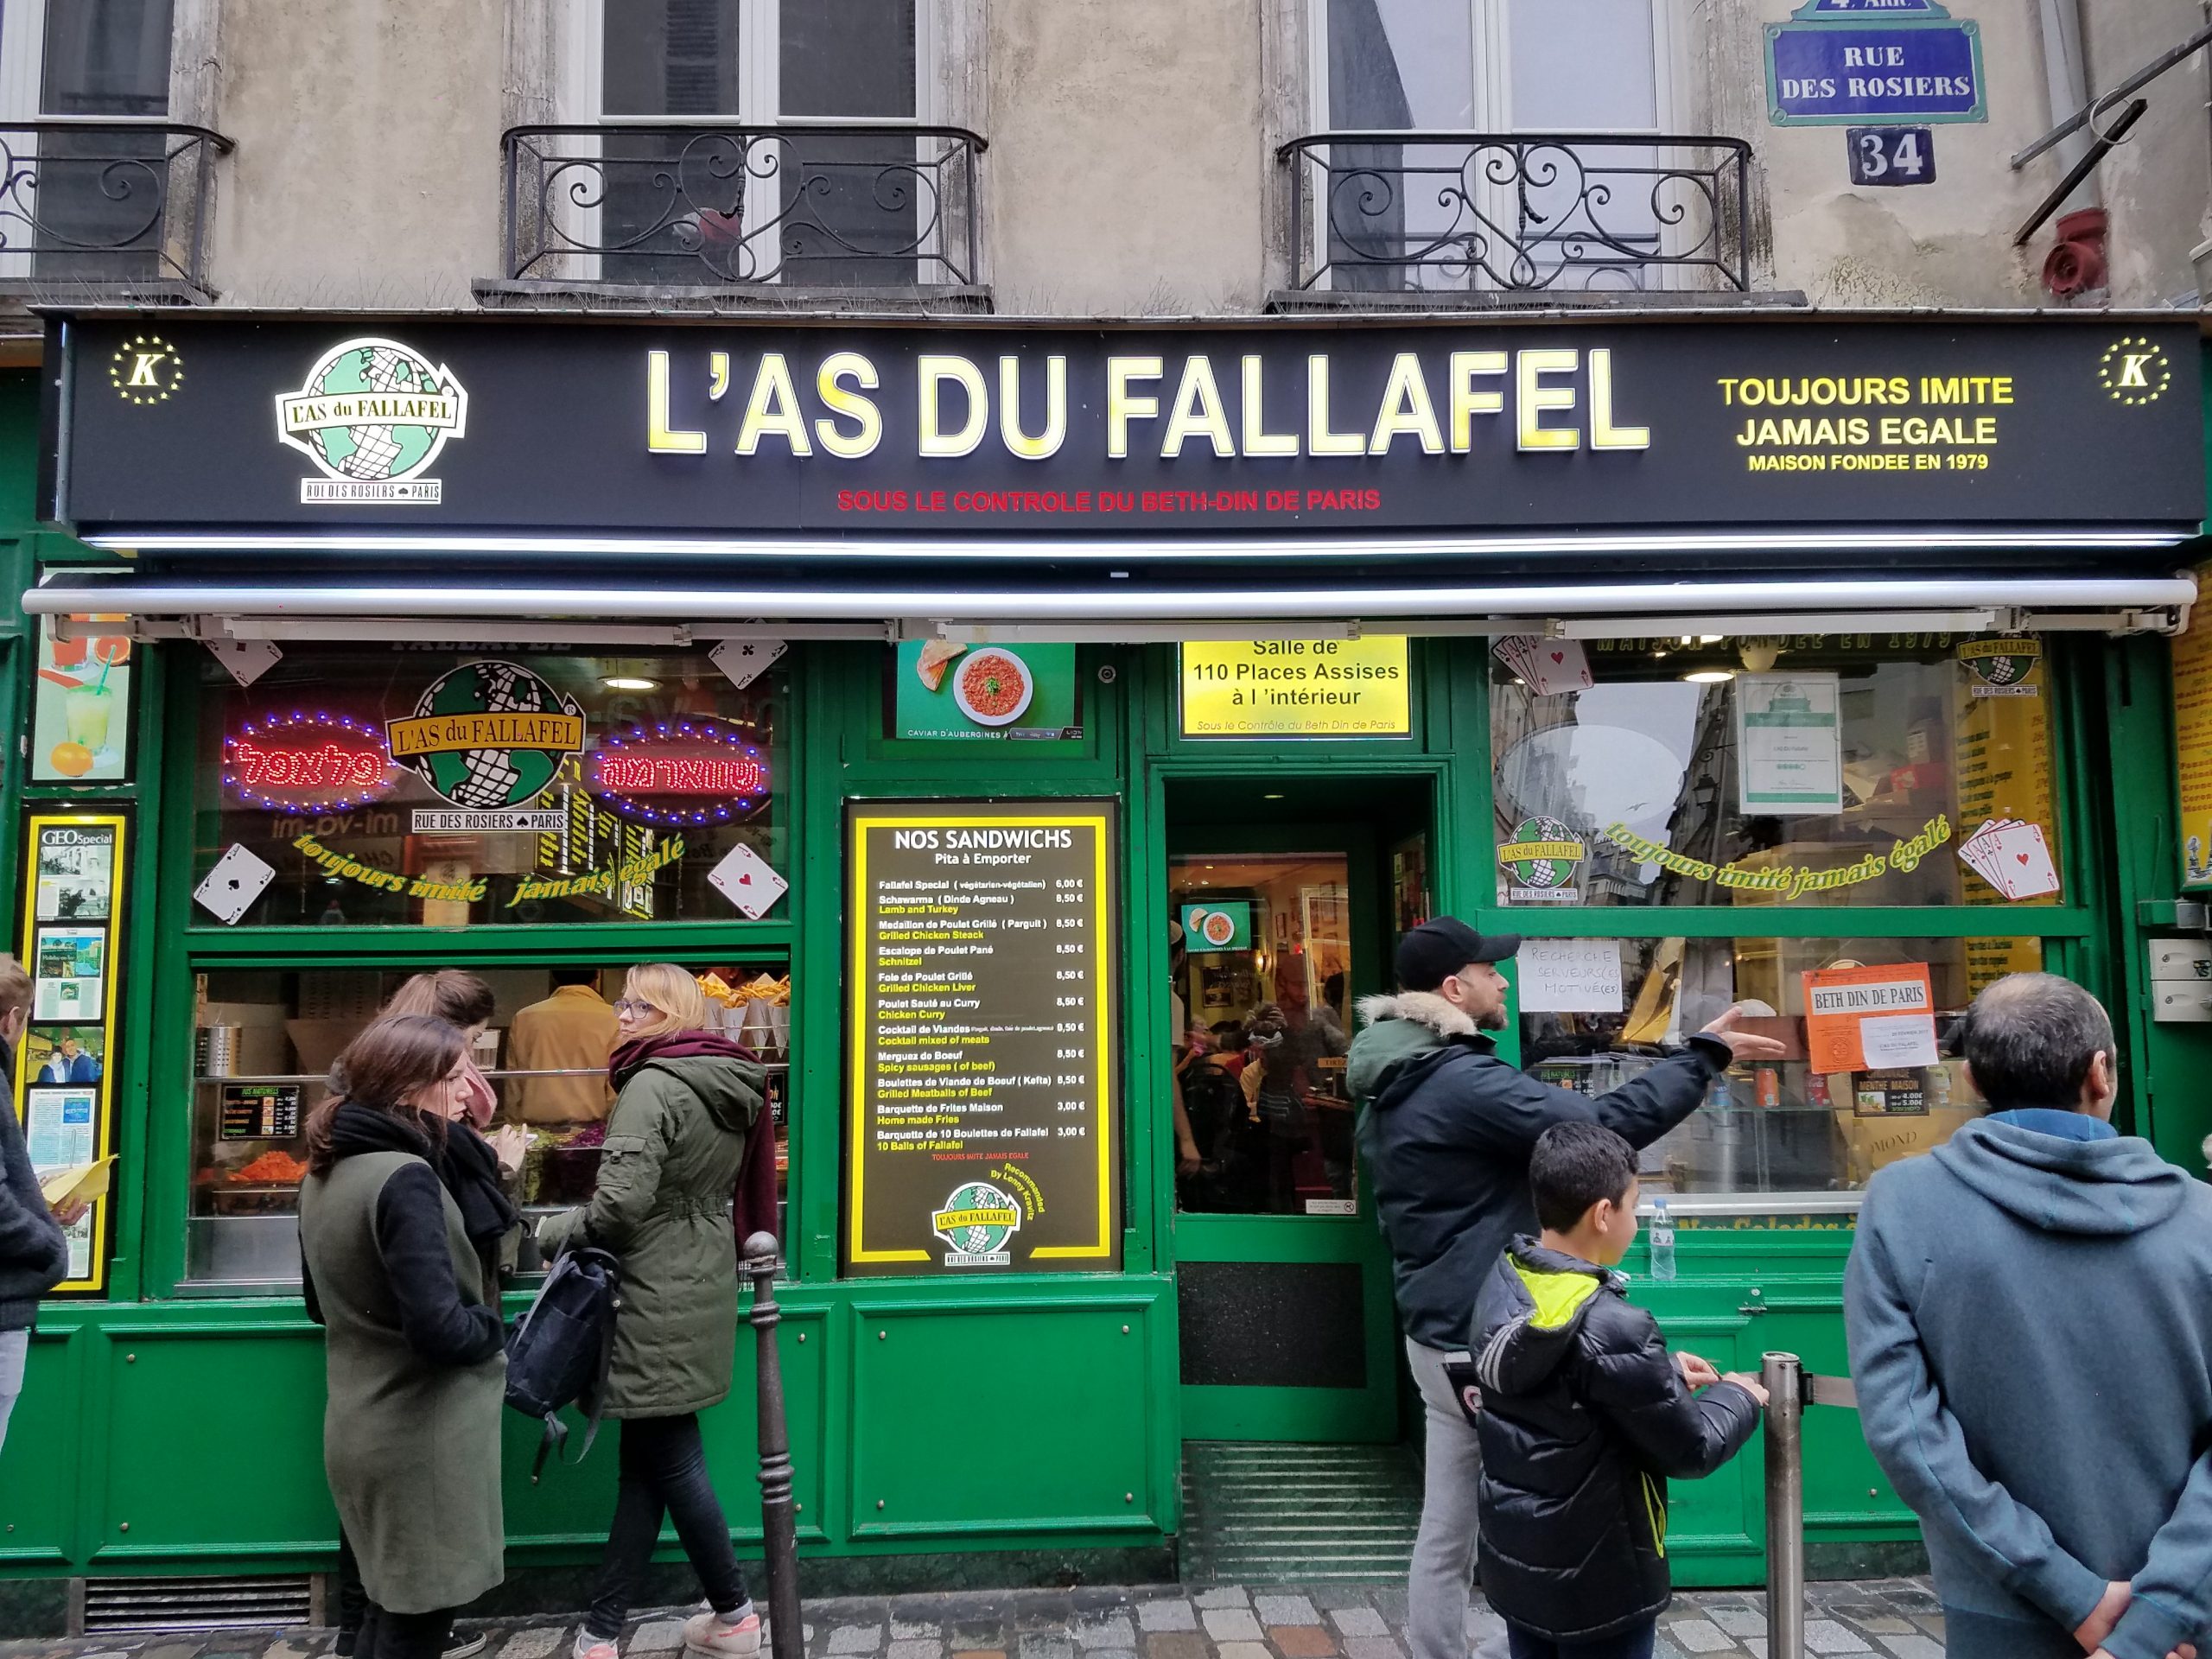 L'As du Fallafel - Things To Do at Place de la Concorde Paris Olympics 2024 | Top Attractions, Night Life, Restaurants